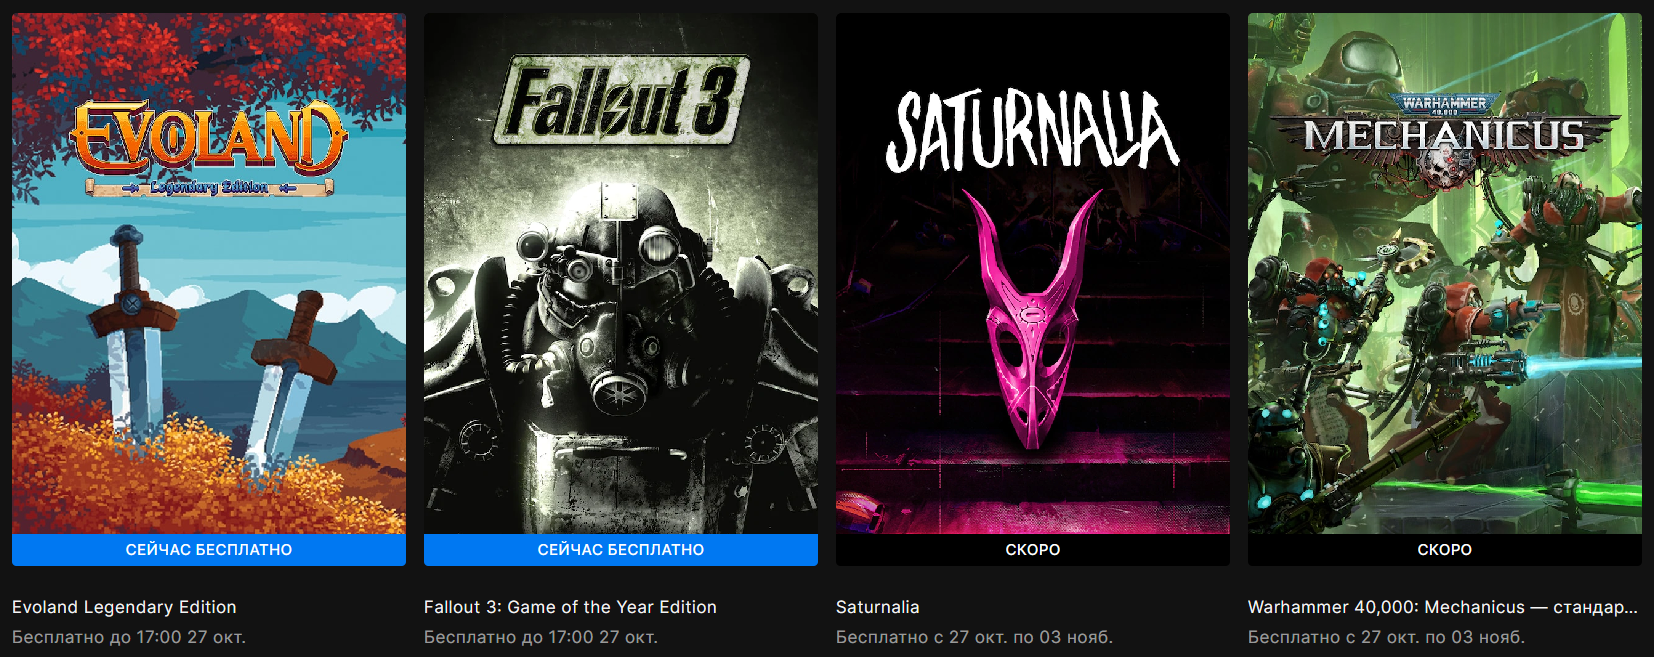 Fallout Epic games. Эволенд 3. Игра Evoland. Fallout 3 полное издание с дополнениями. Epic games сейчас